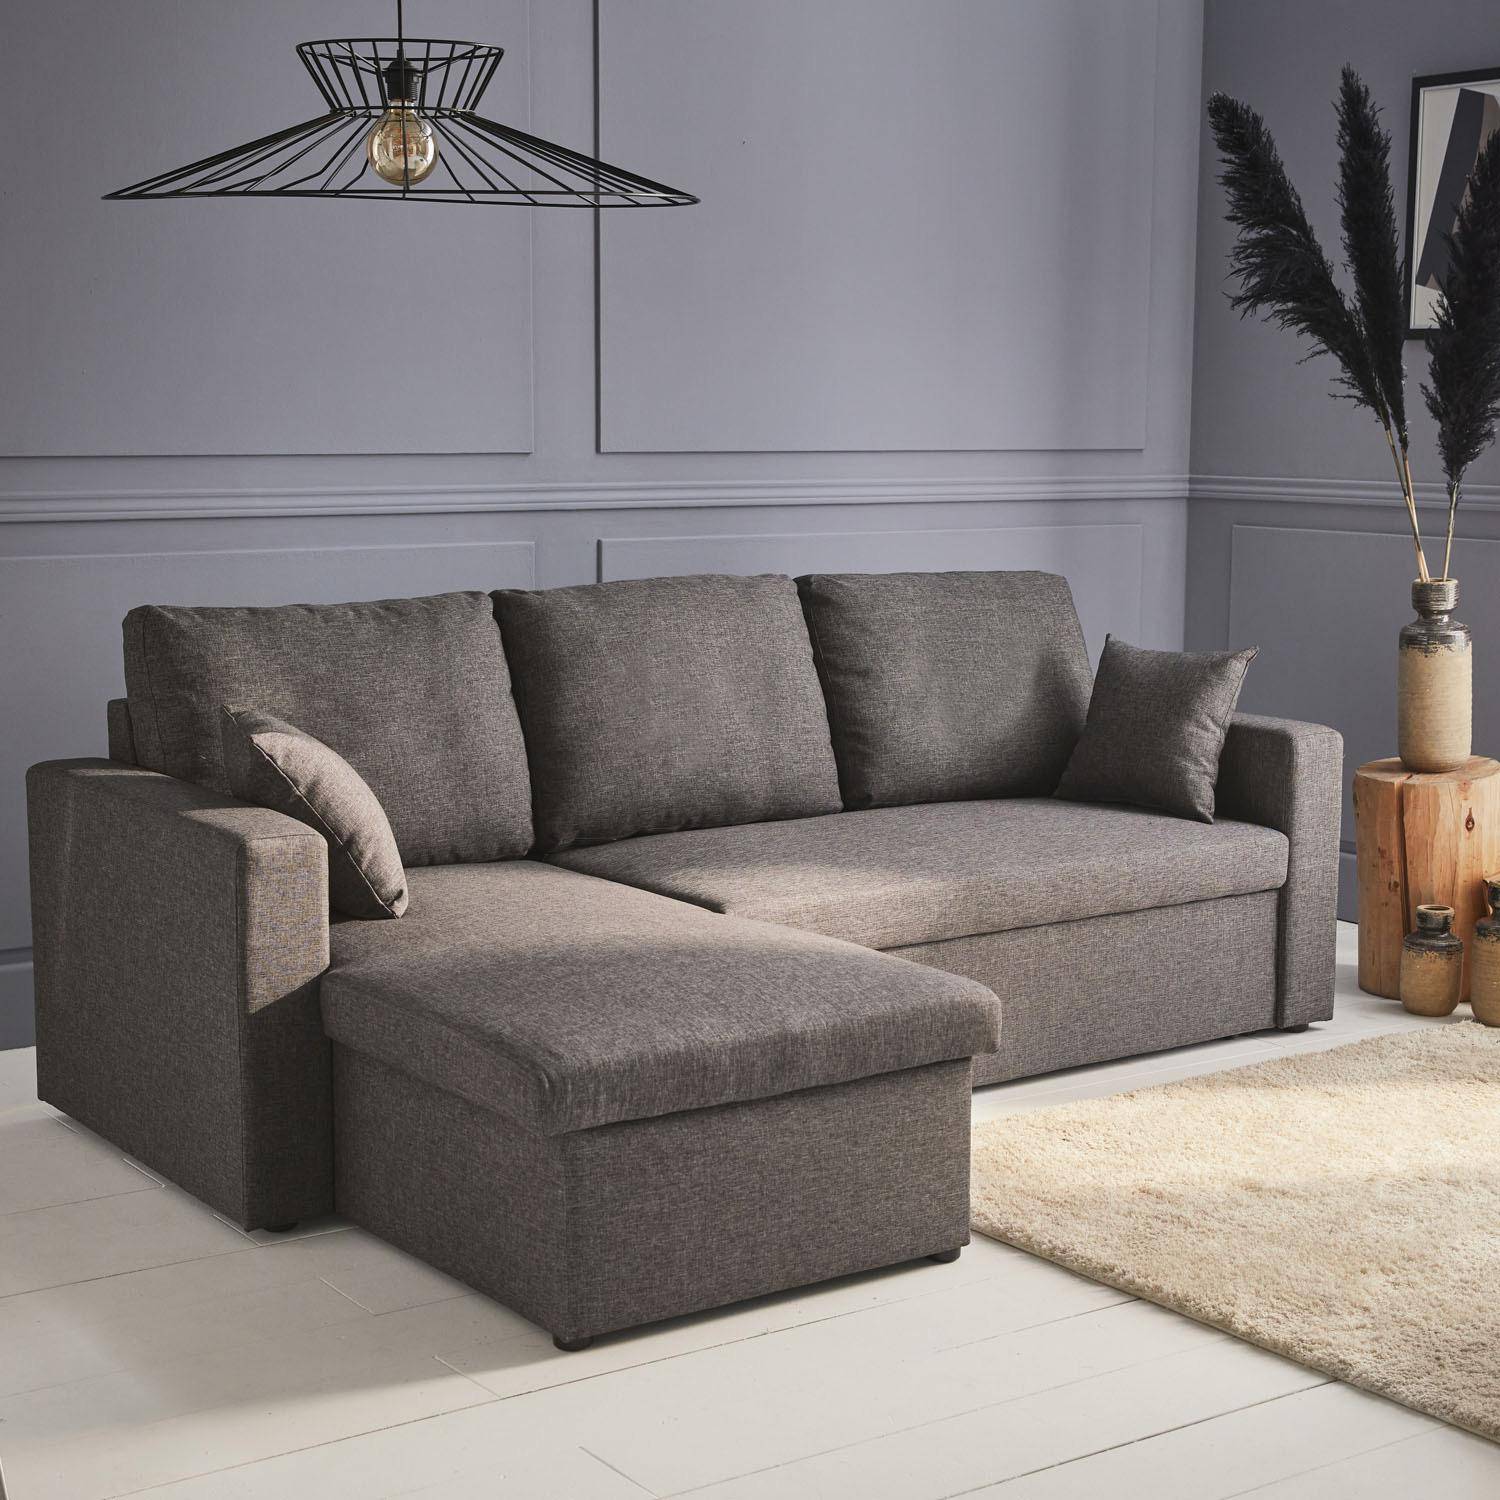 3-seater reversible grey corner sofa bed with storage box, : L219xD81xH68cm, IDA Photo1